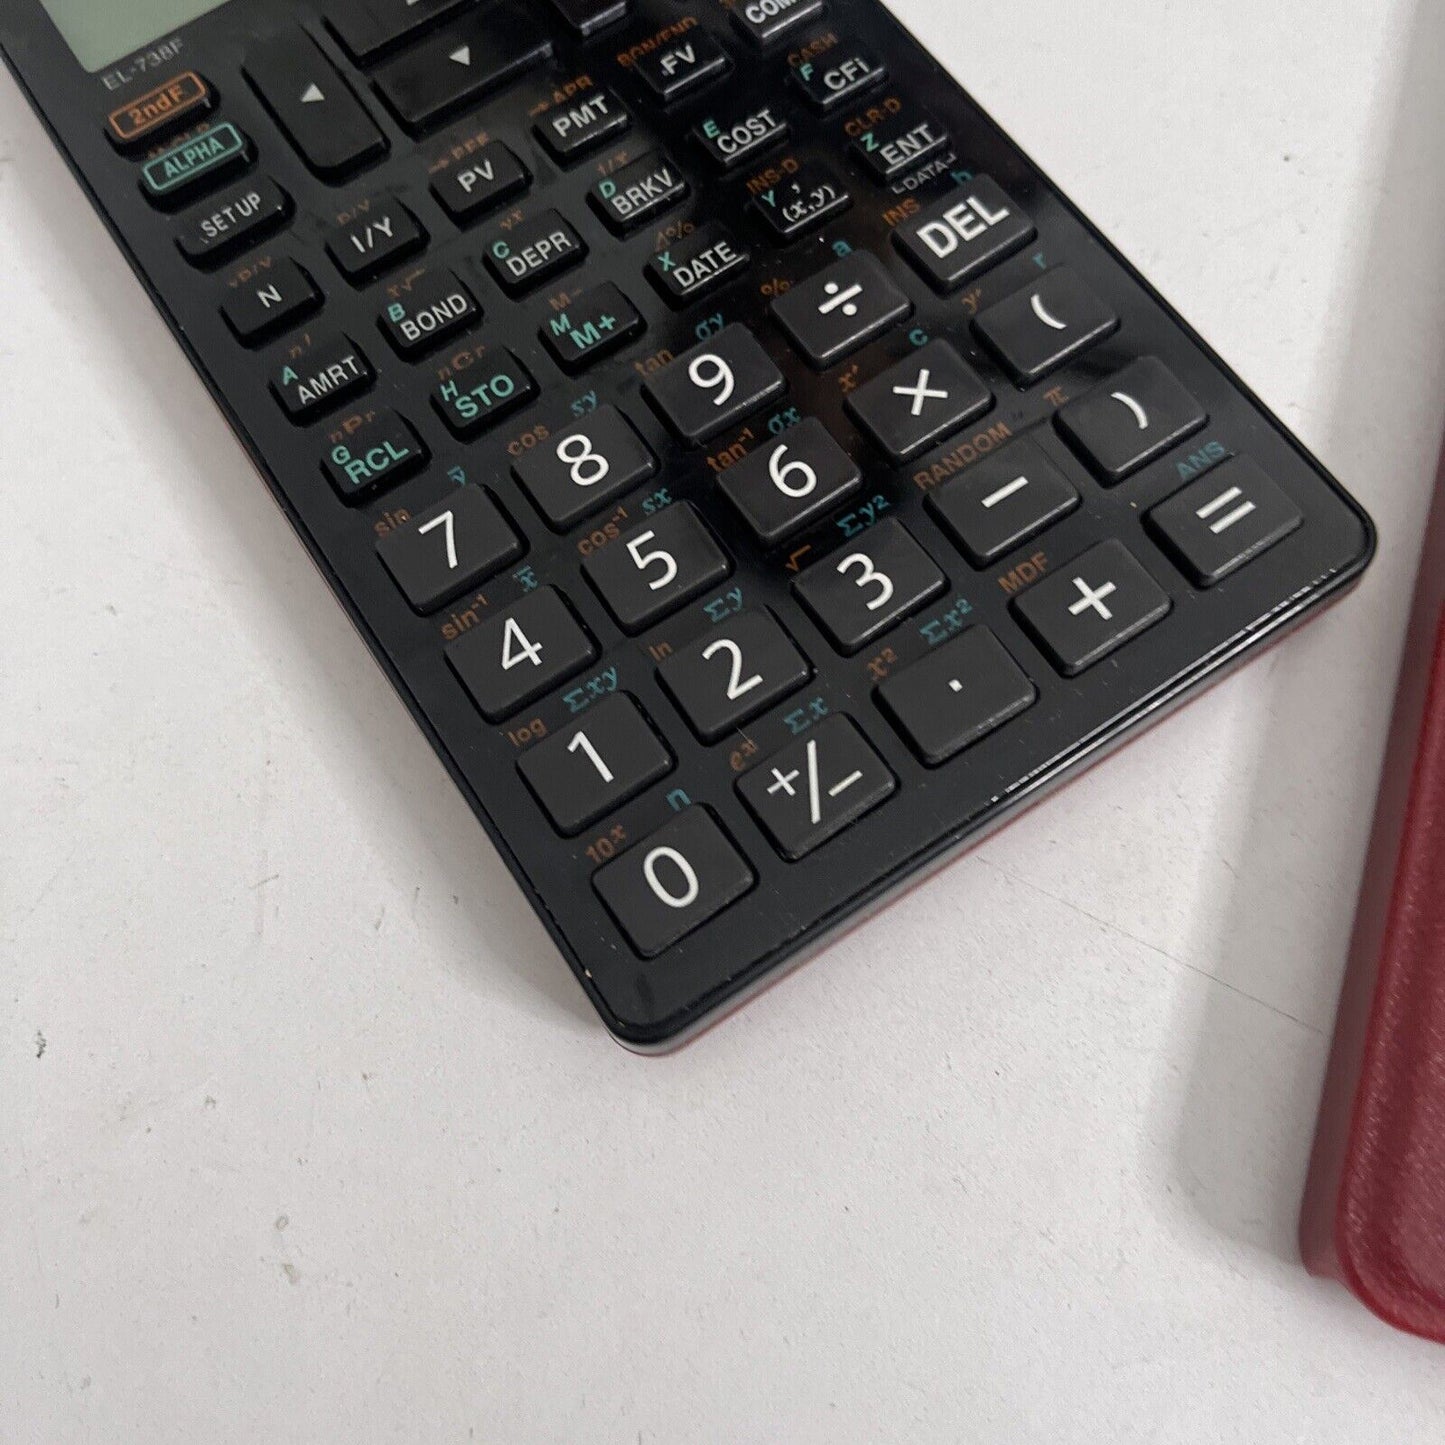 Sharp EL-738F Financial Calculator Business Calculator